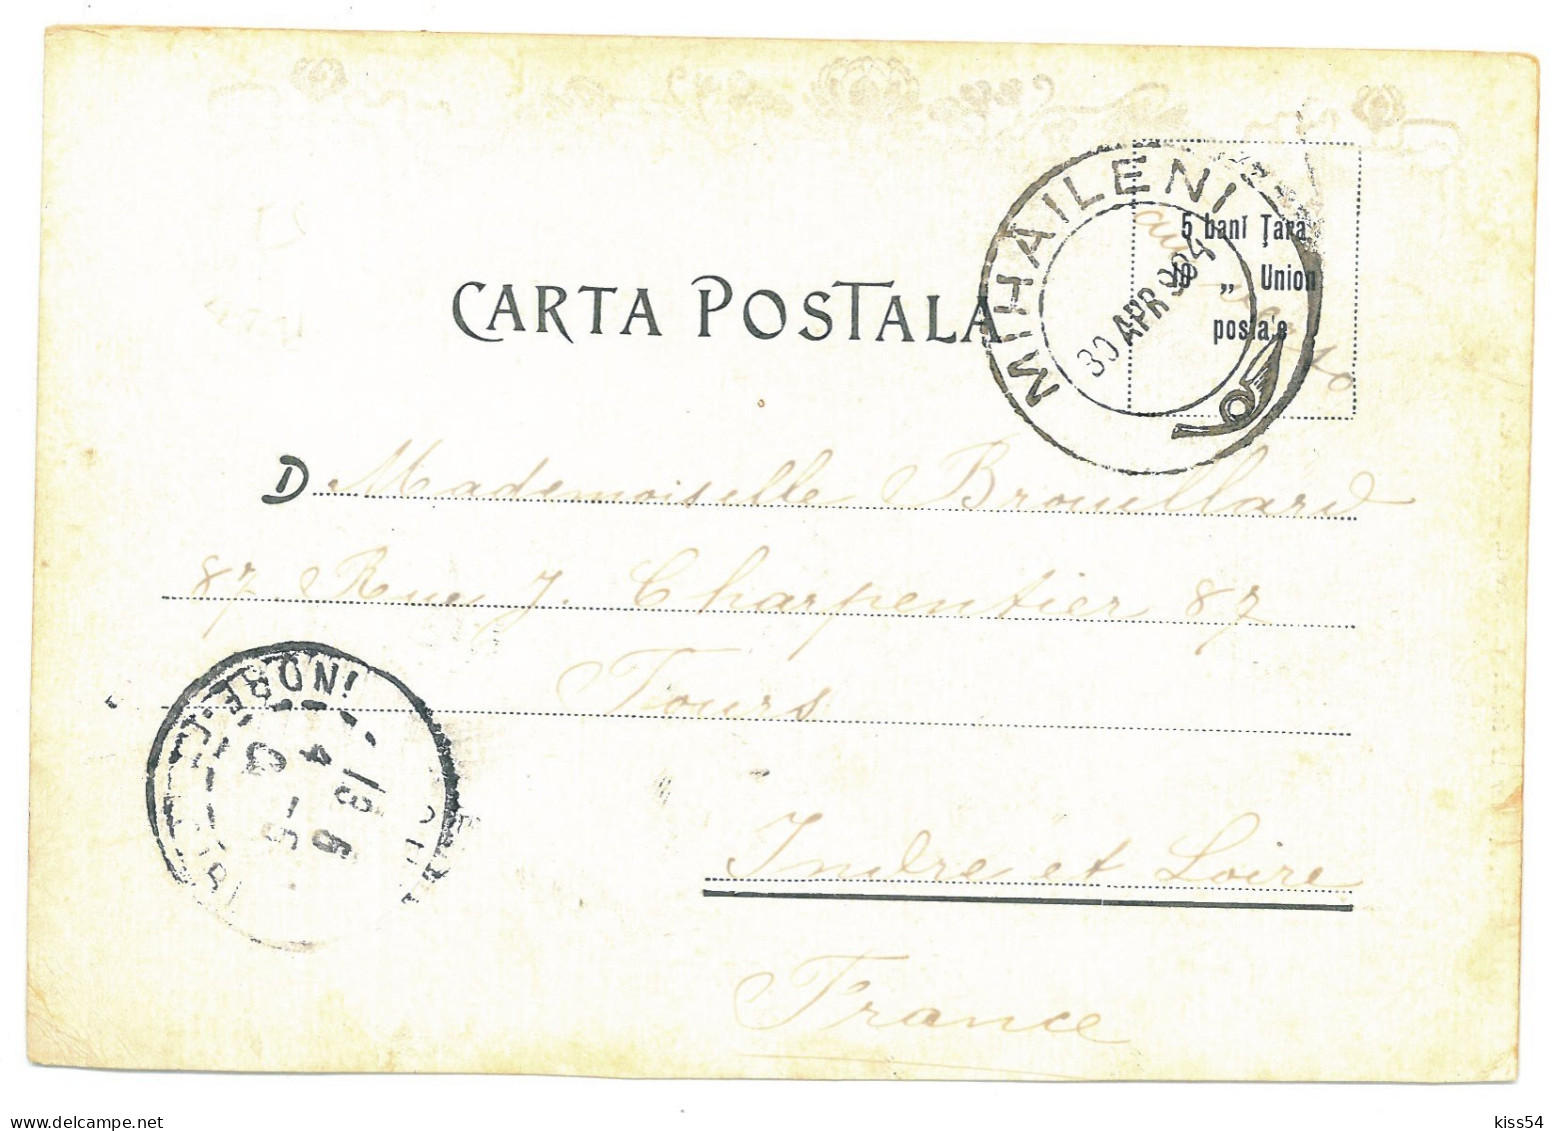 RO 38 - 20635 BUCURESTI, Atheneum, Music, Romania - Old Postcard - Used - 1904 - Romania